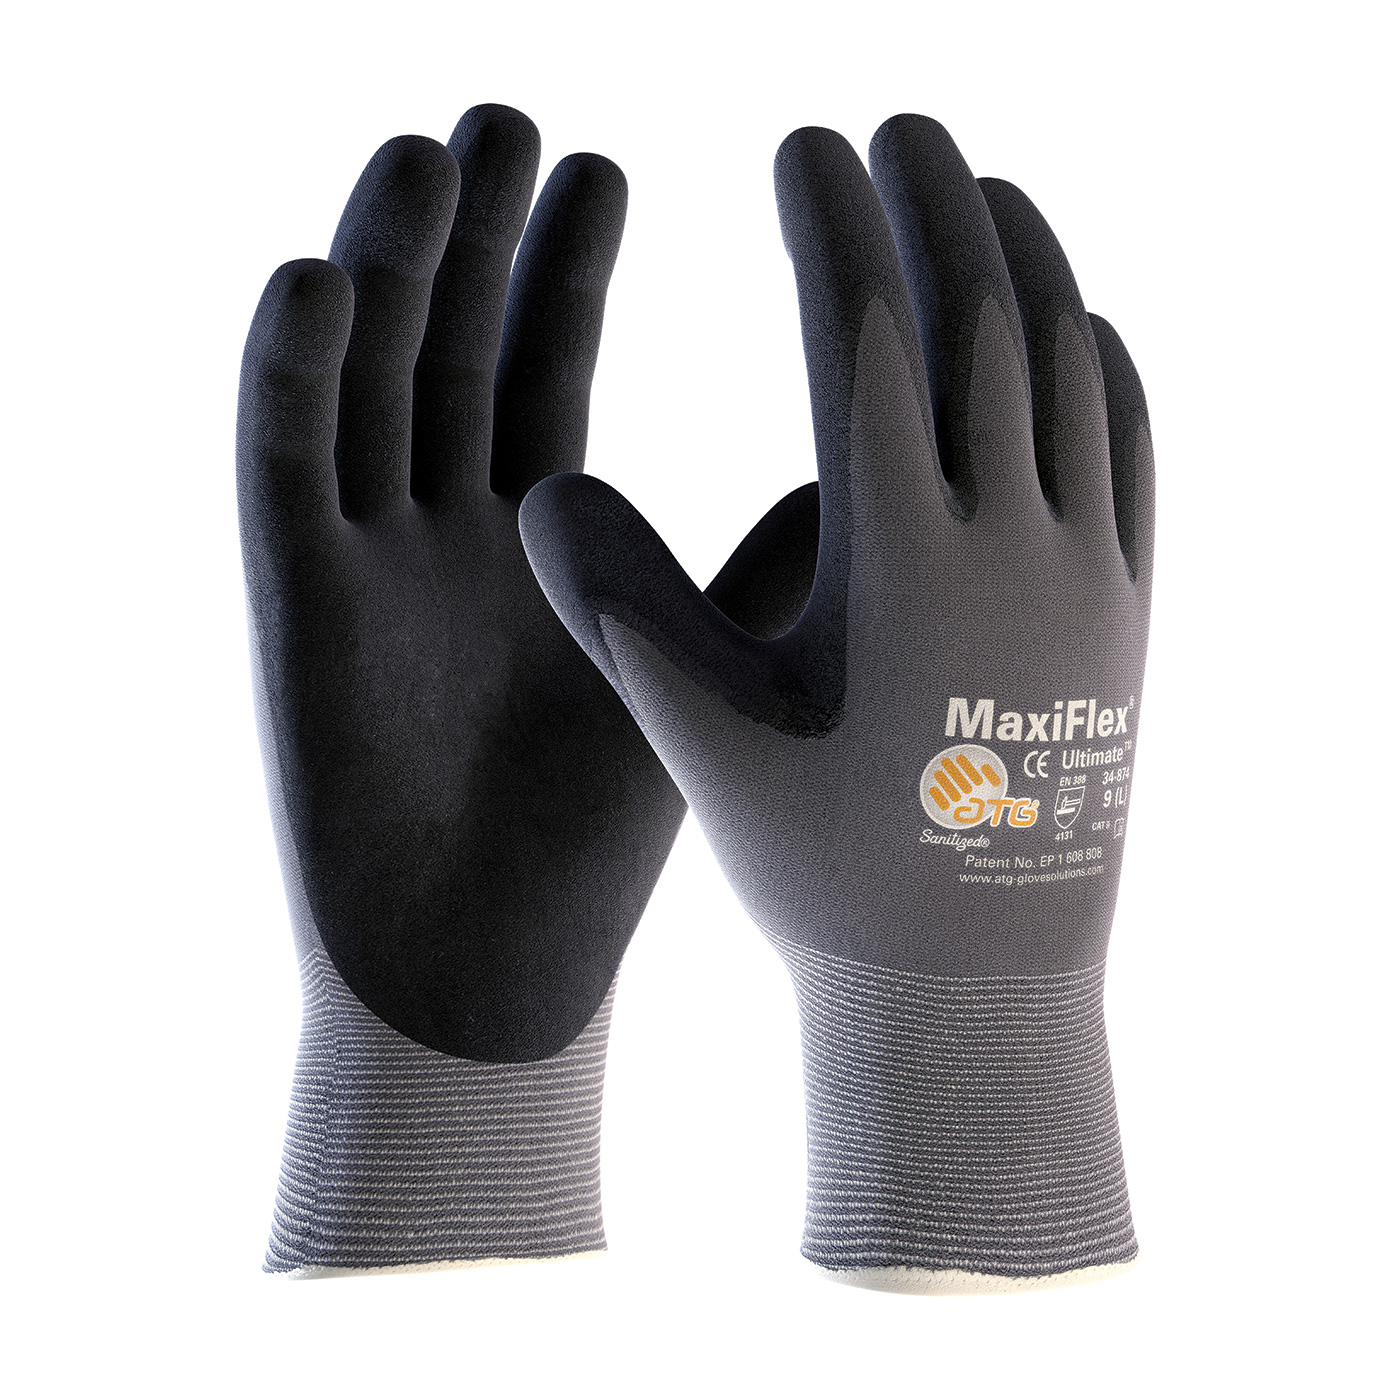 PIP 34-874/XXL MaxiFlex Ultimate Seamless Knit Nylon/Lycra Glove with Nitrile Coated MicroFoam Grip on Palm & Fingers - 2X-Large PID-34 874 XXL